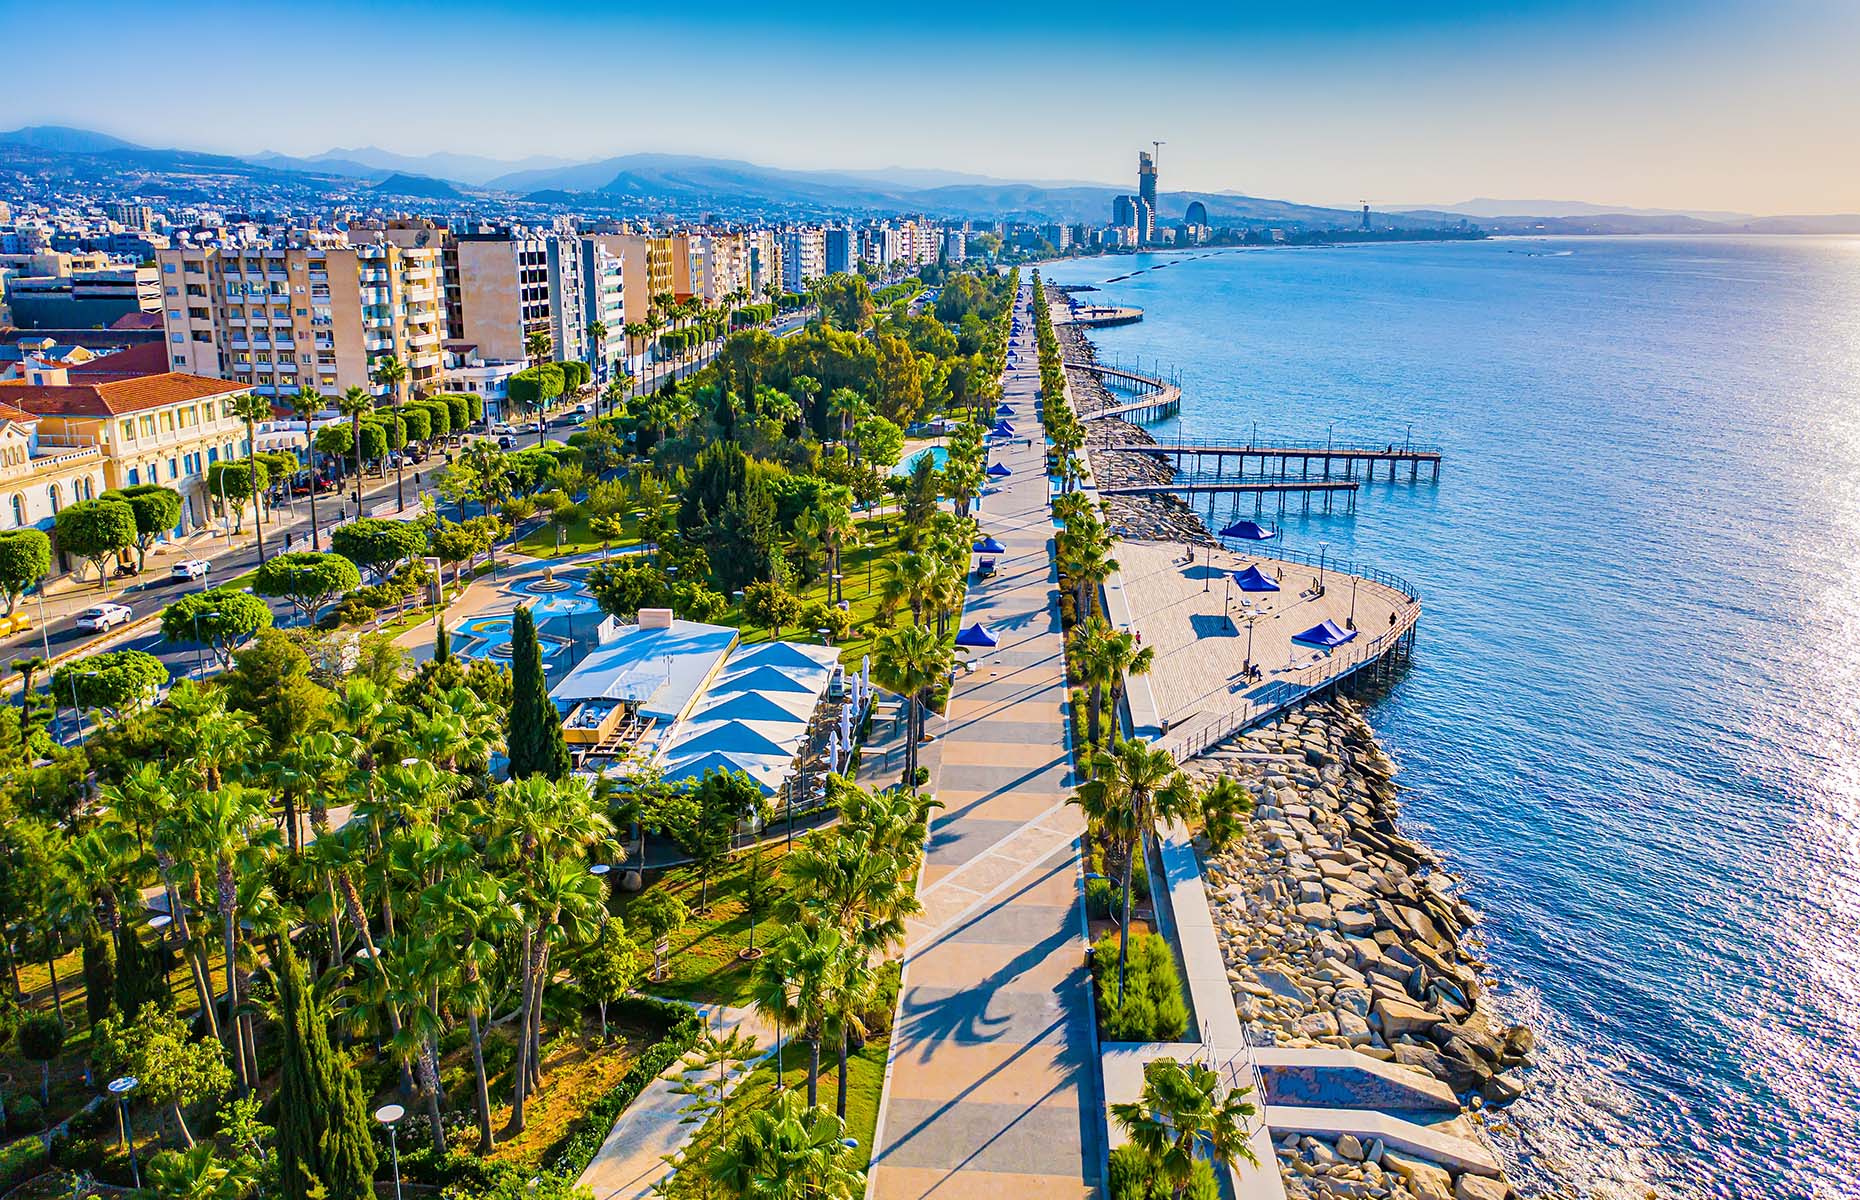 Limassol seafront (Image: FOTOGRIN/Shutterstock)